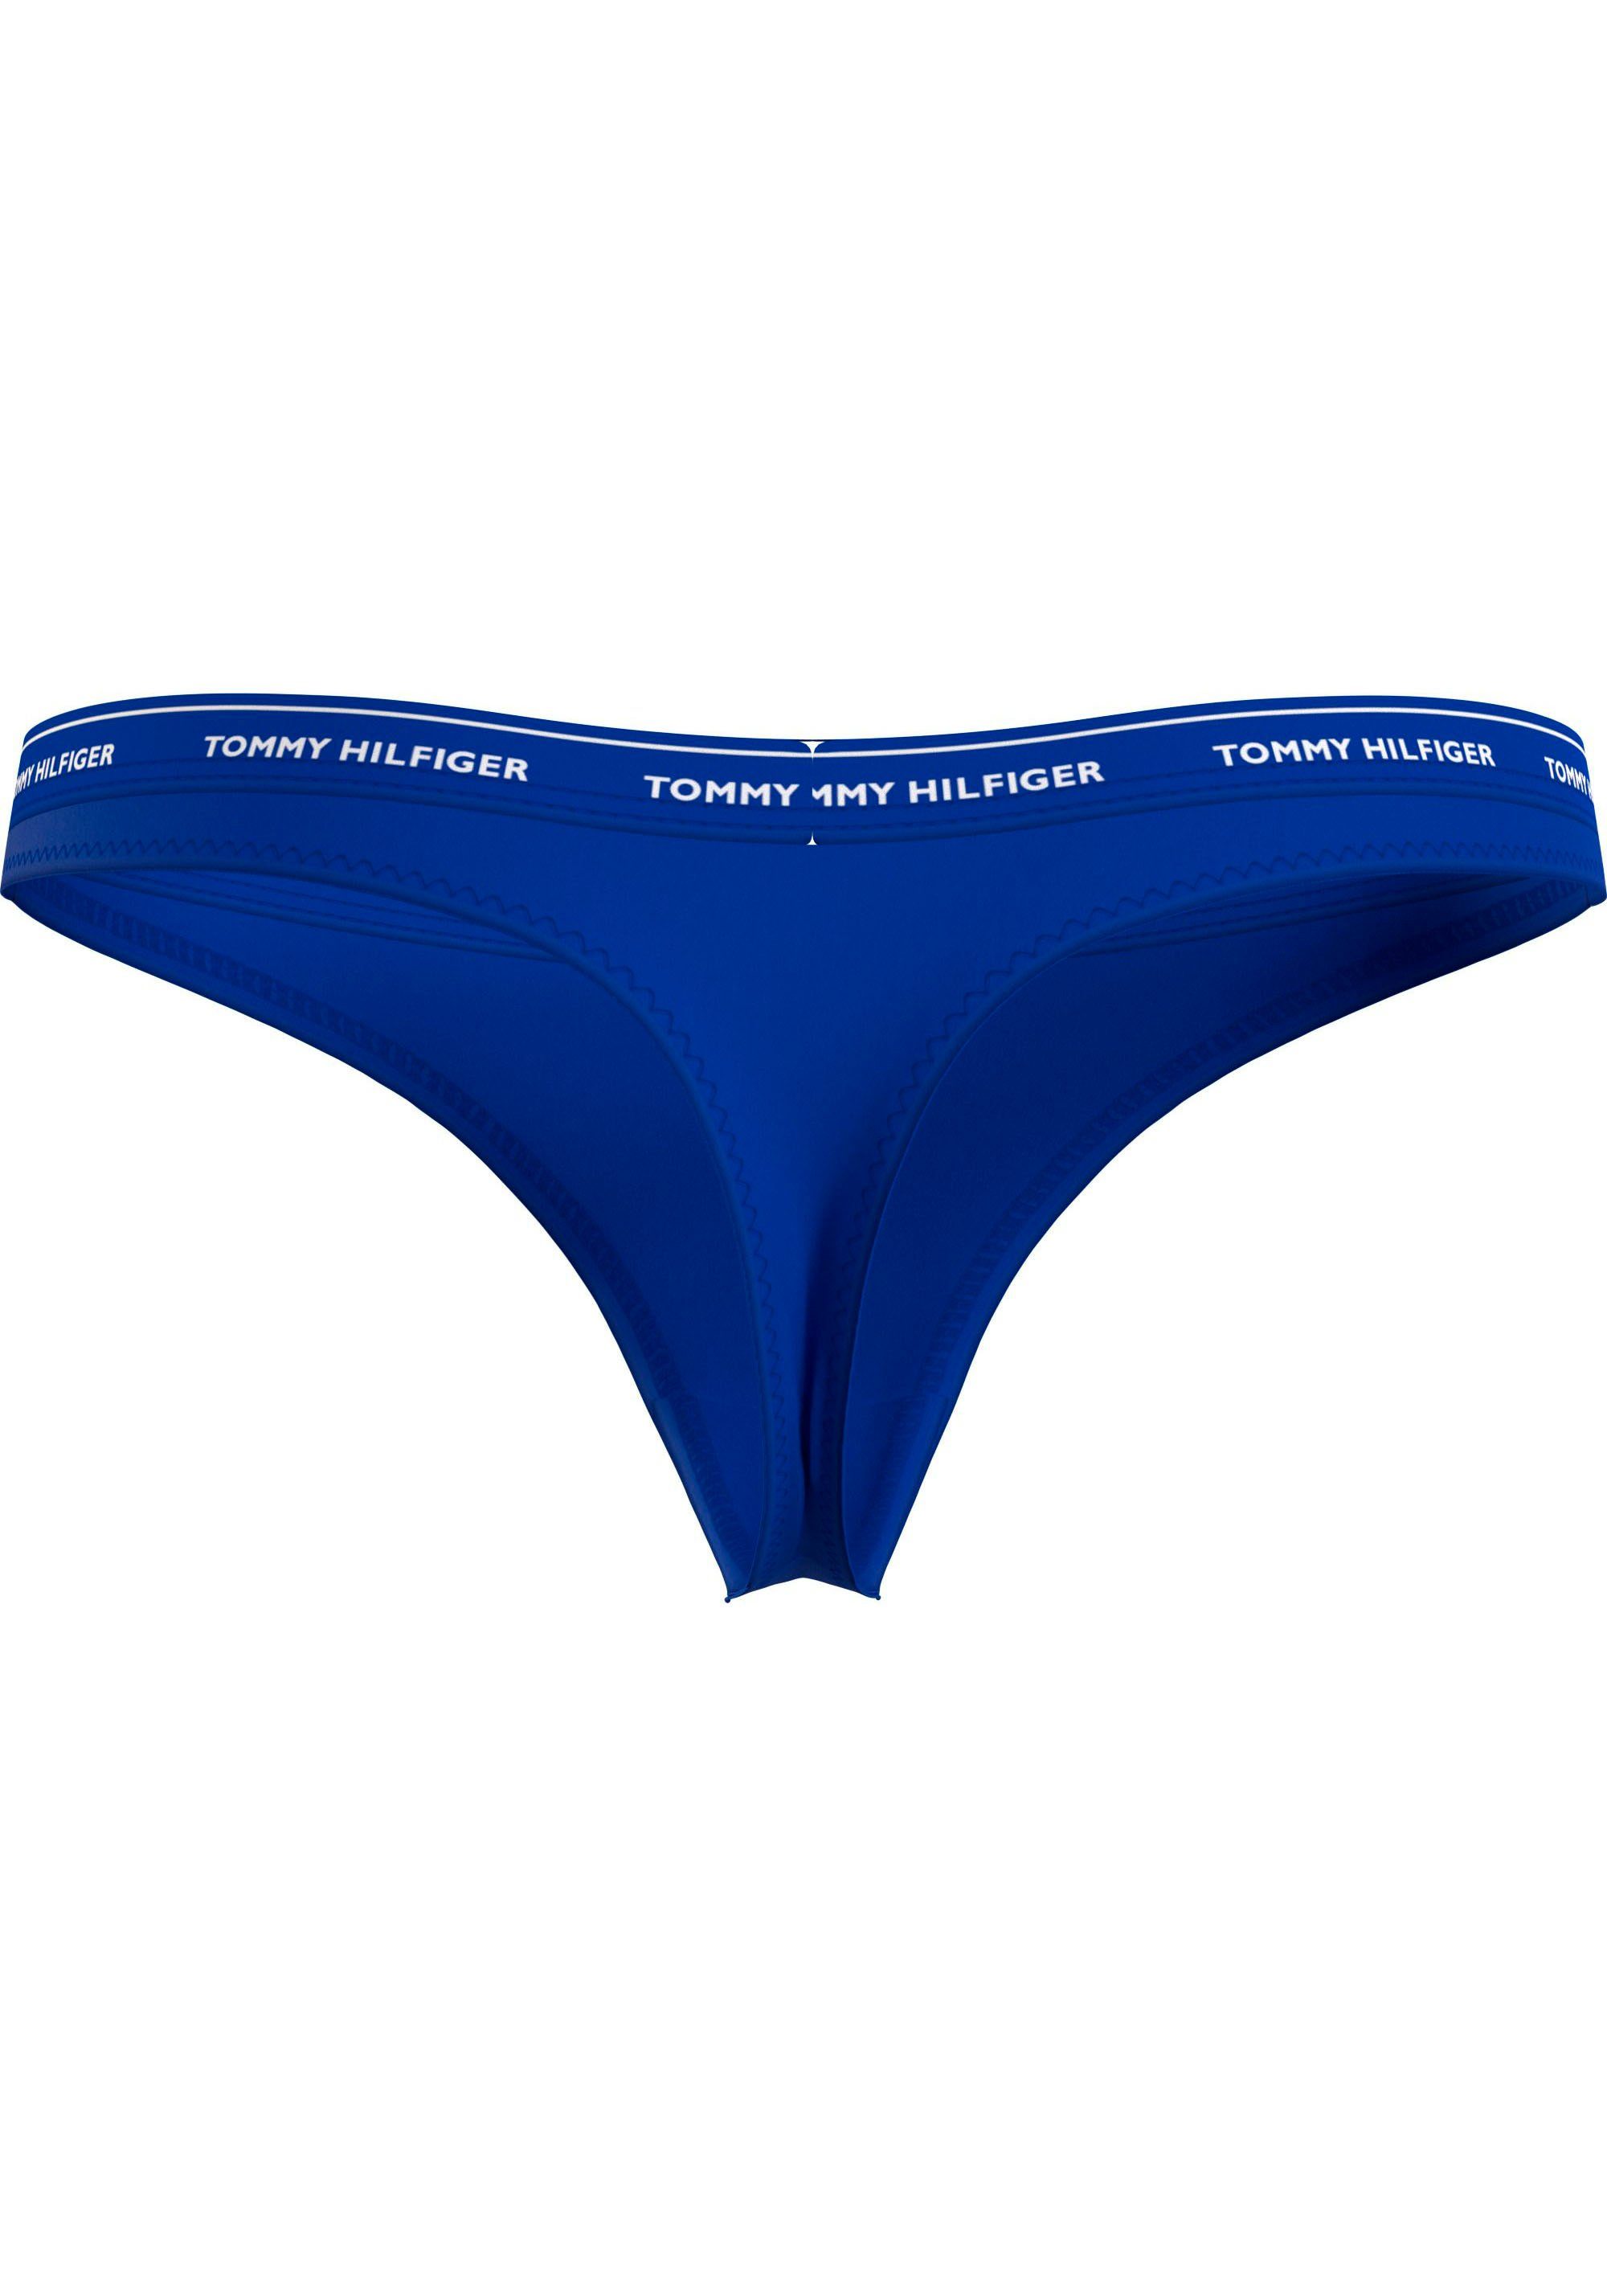 Tommy Hilfiger Underwear T-String THONG Labelfarben (Packung, 5-St., mit Logobund PACK 5er-Pack) 5 Rouge/Ultra/Guava/Des_Sky/Burg modischem GIFTING in